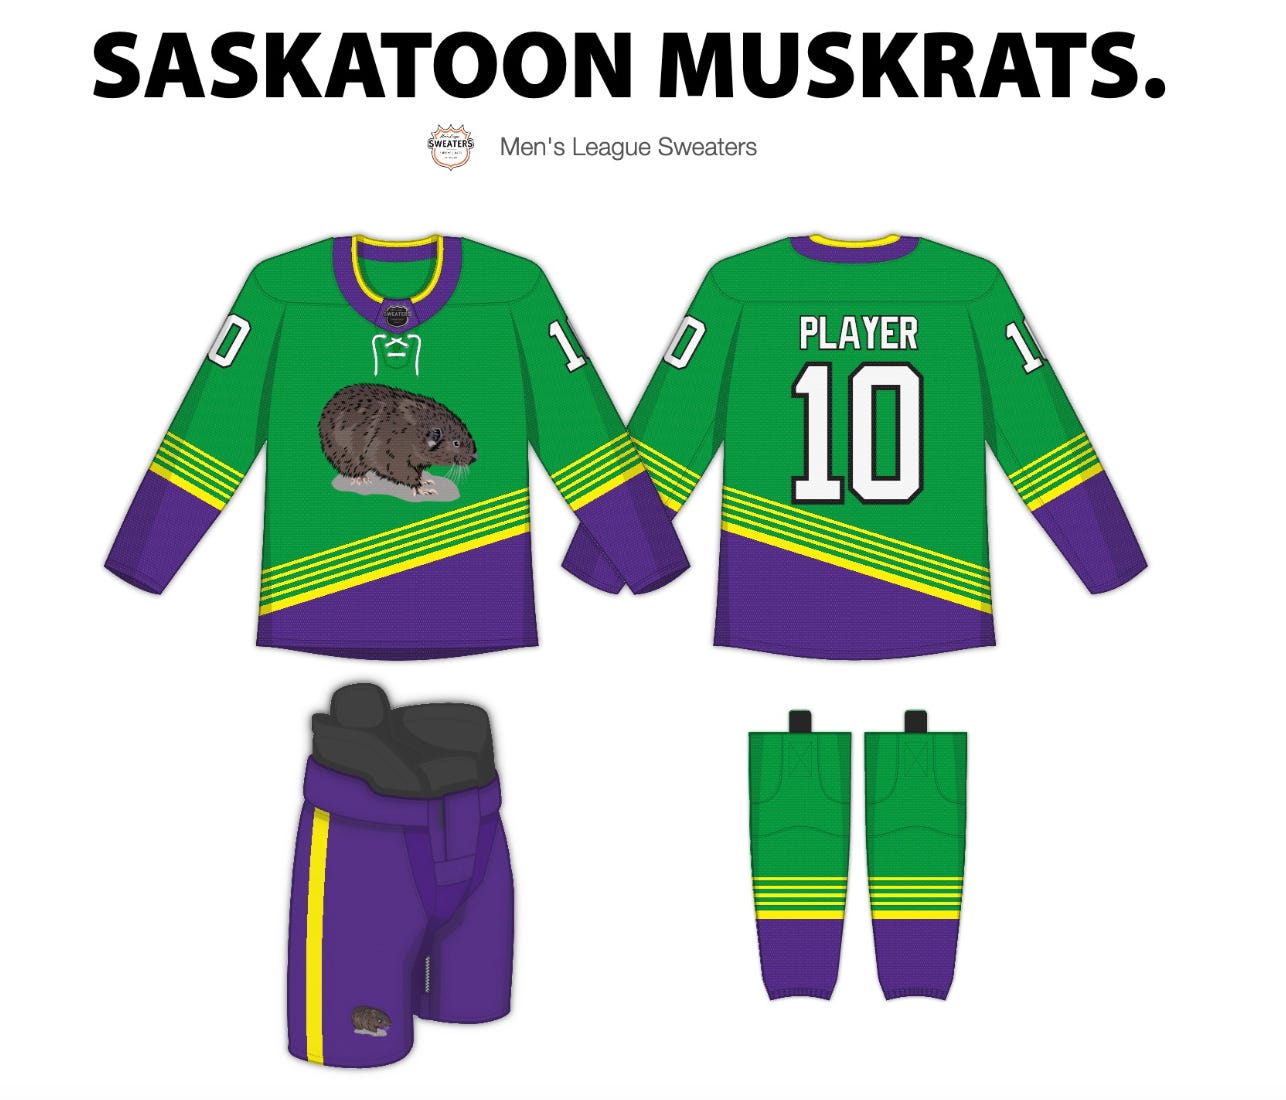 My Dream Expansion Team: The Saskatoon Muskrats